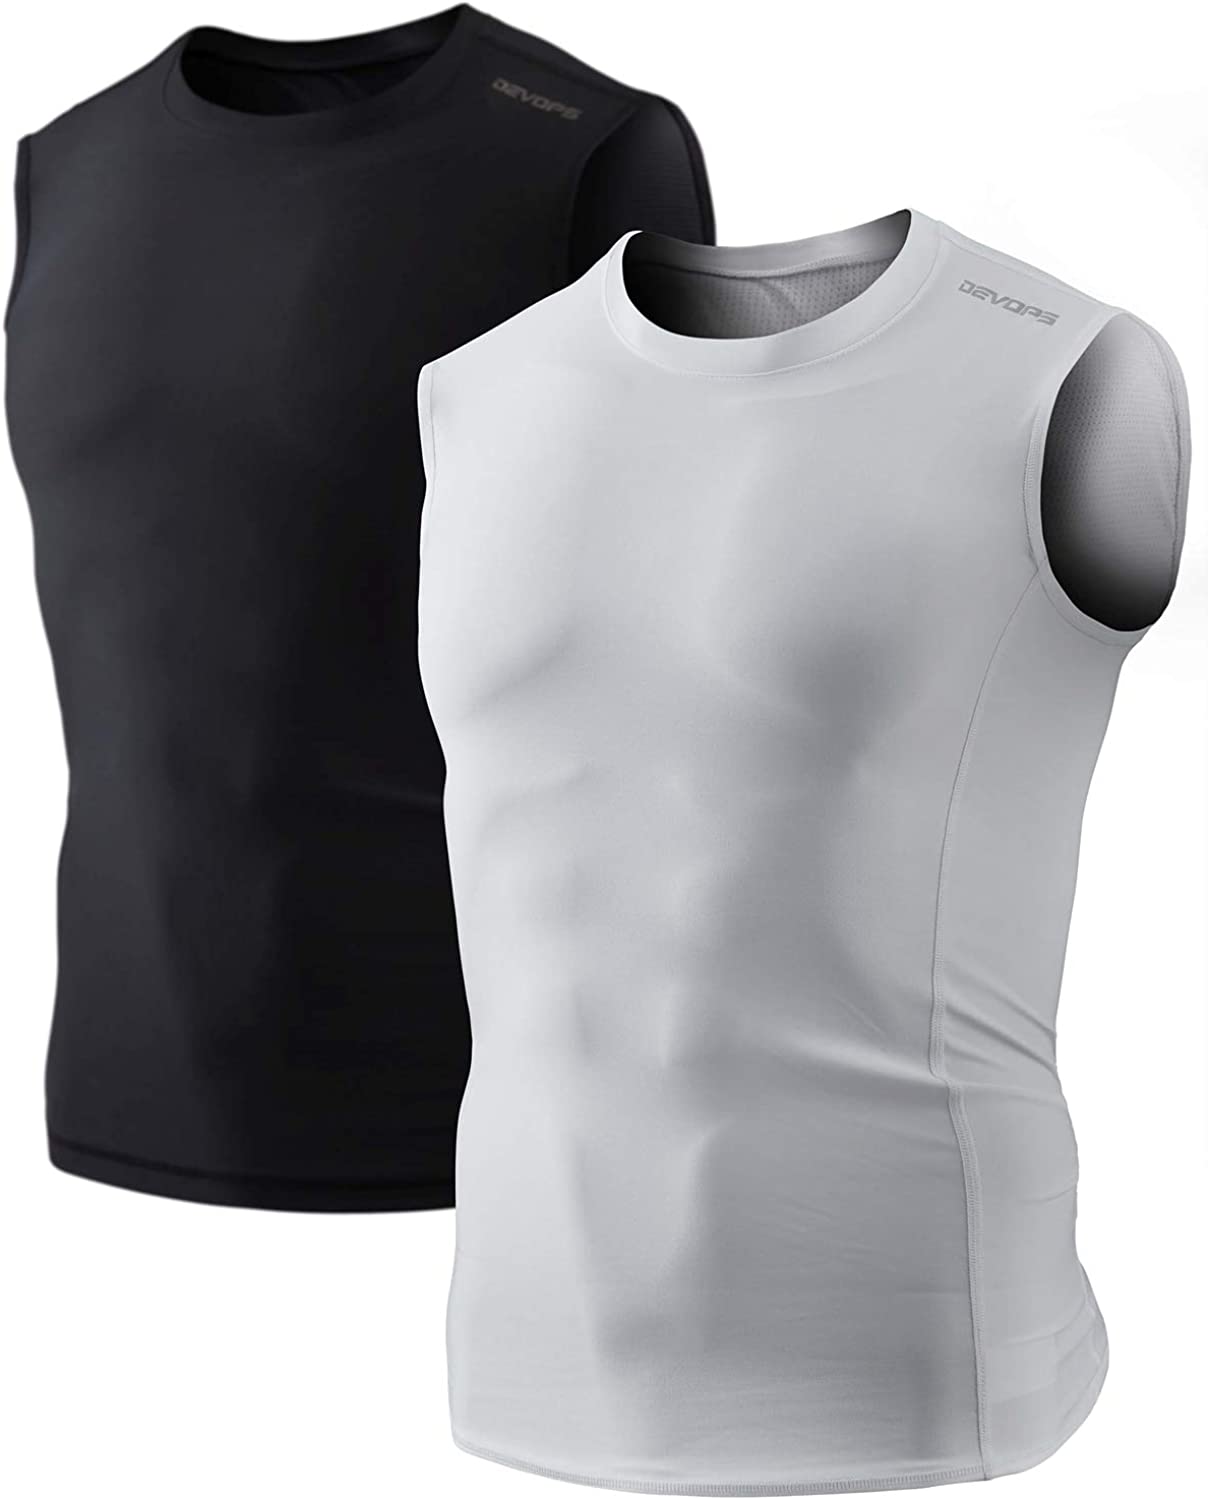 DEVOPS 2~3 Pack Men's Athletic Compression Shirts Sleeveless 